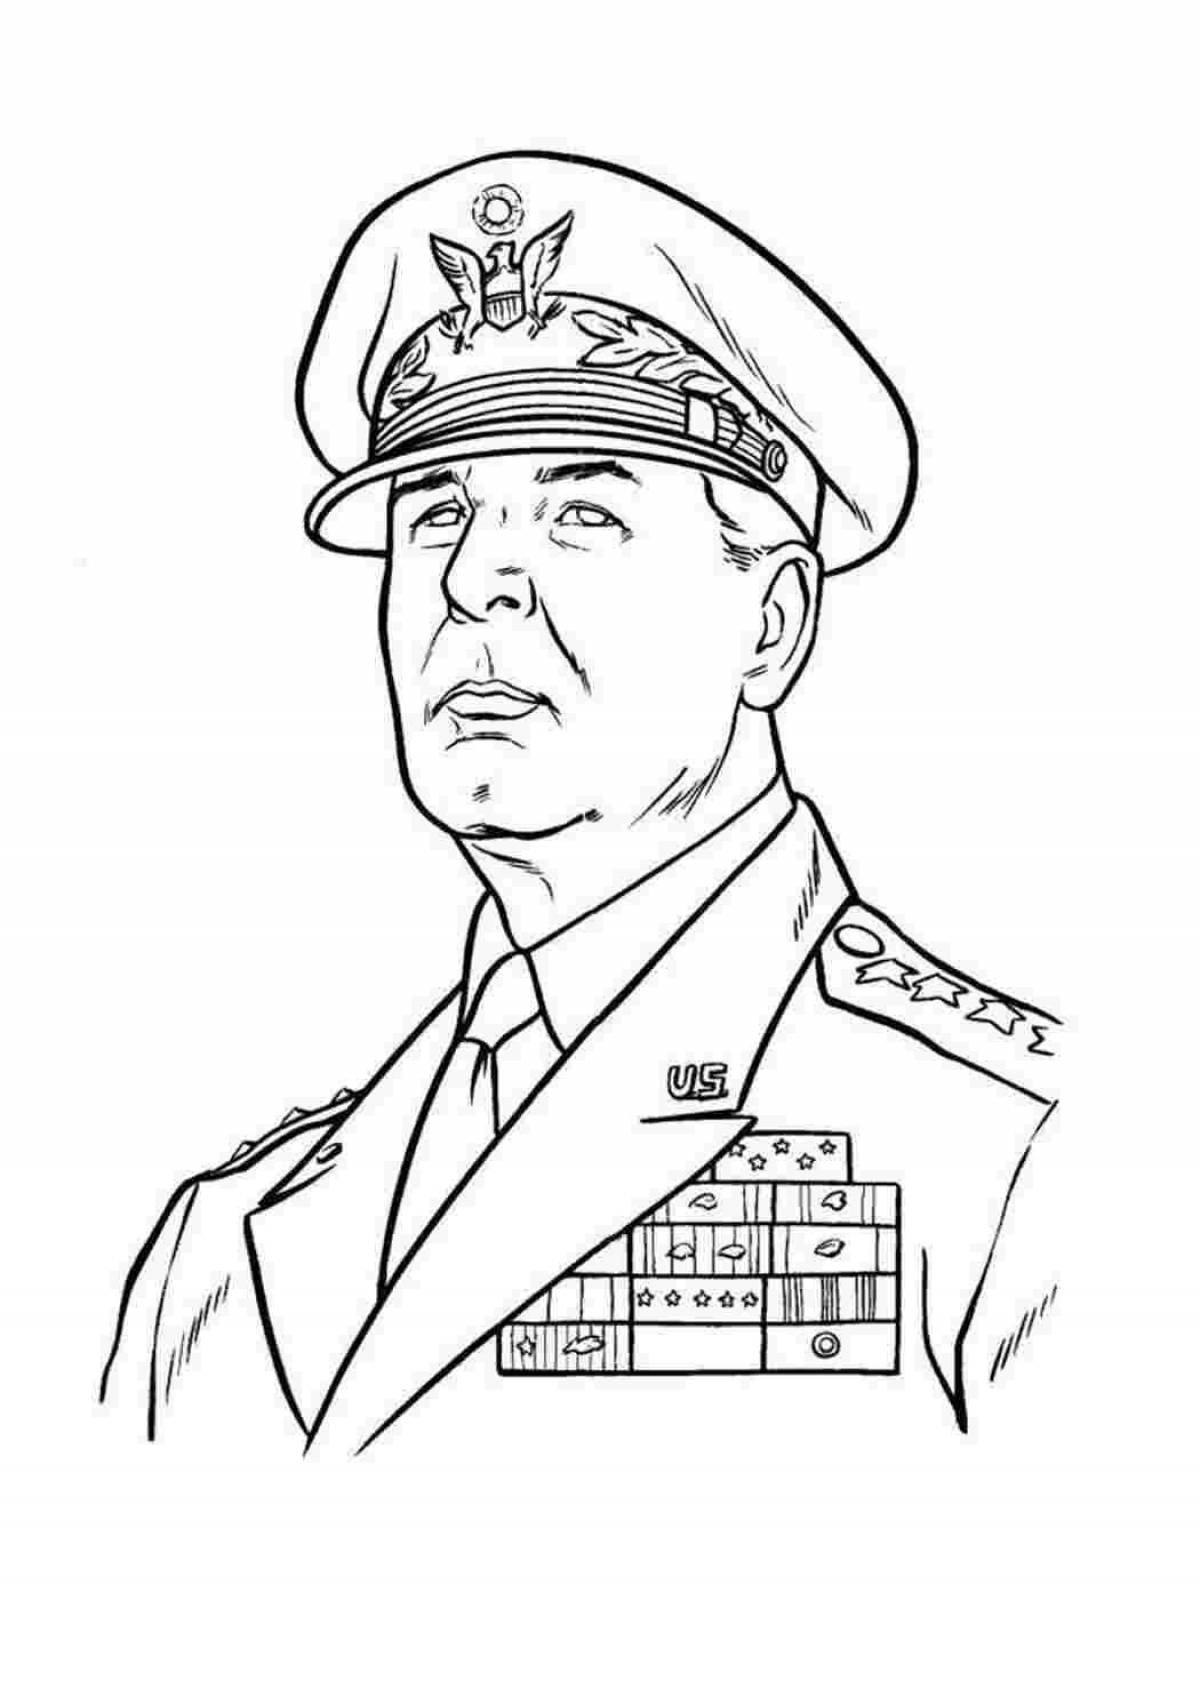 Military portrait #1